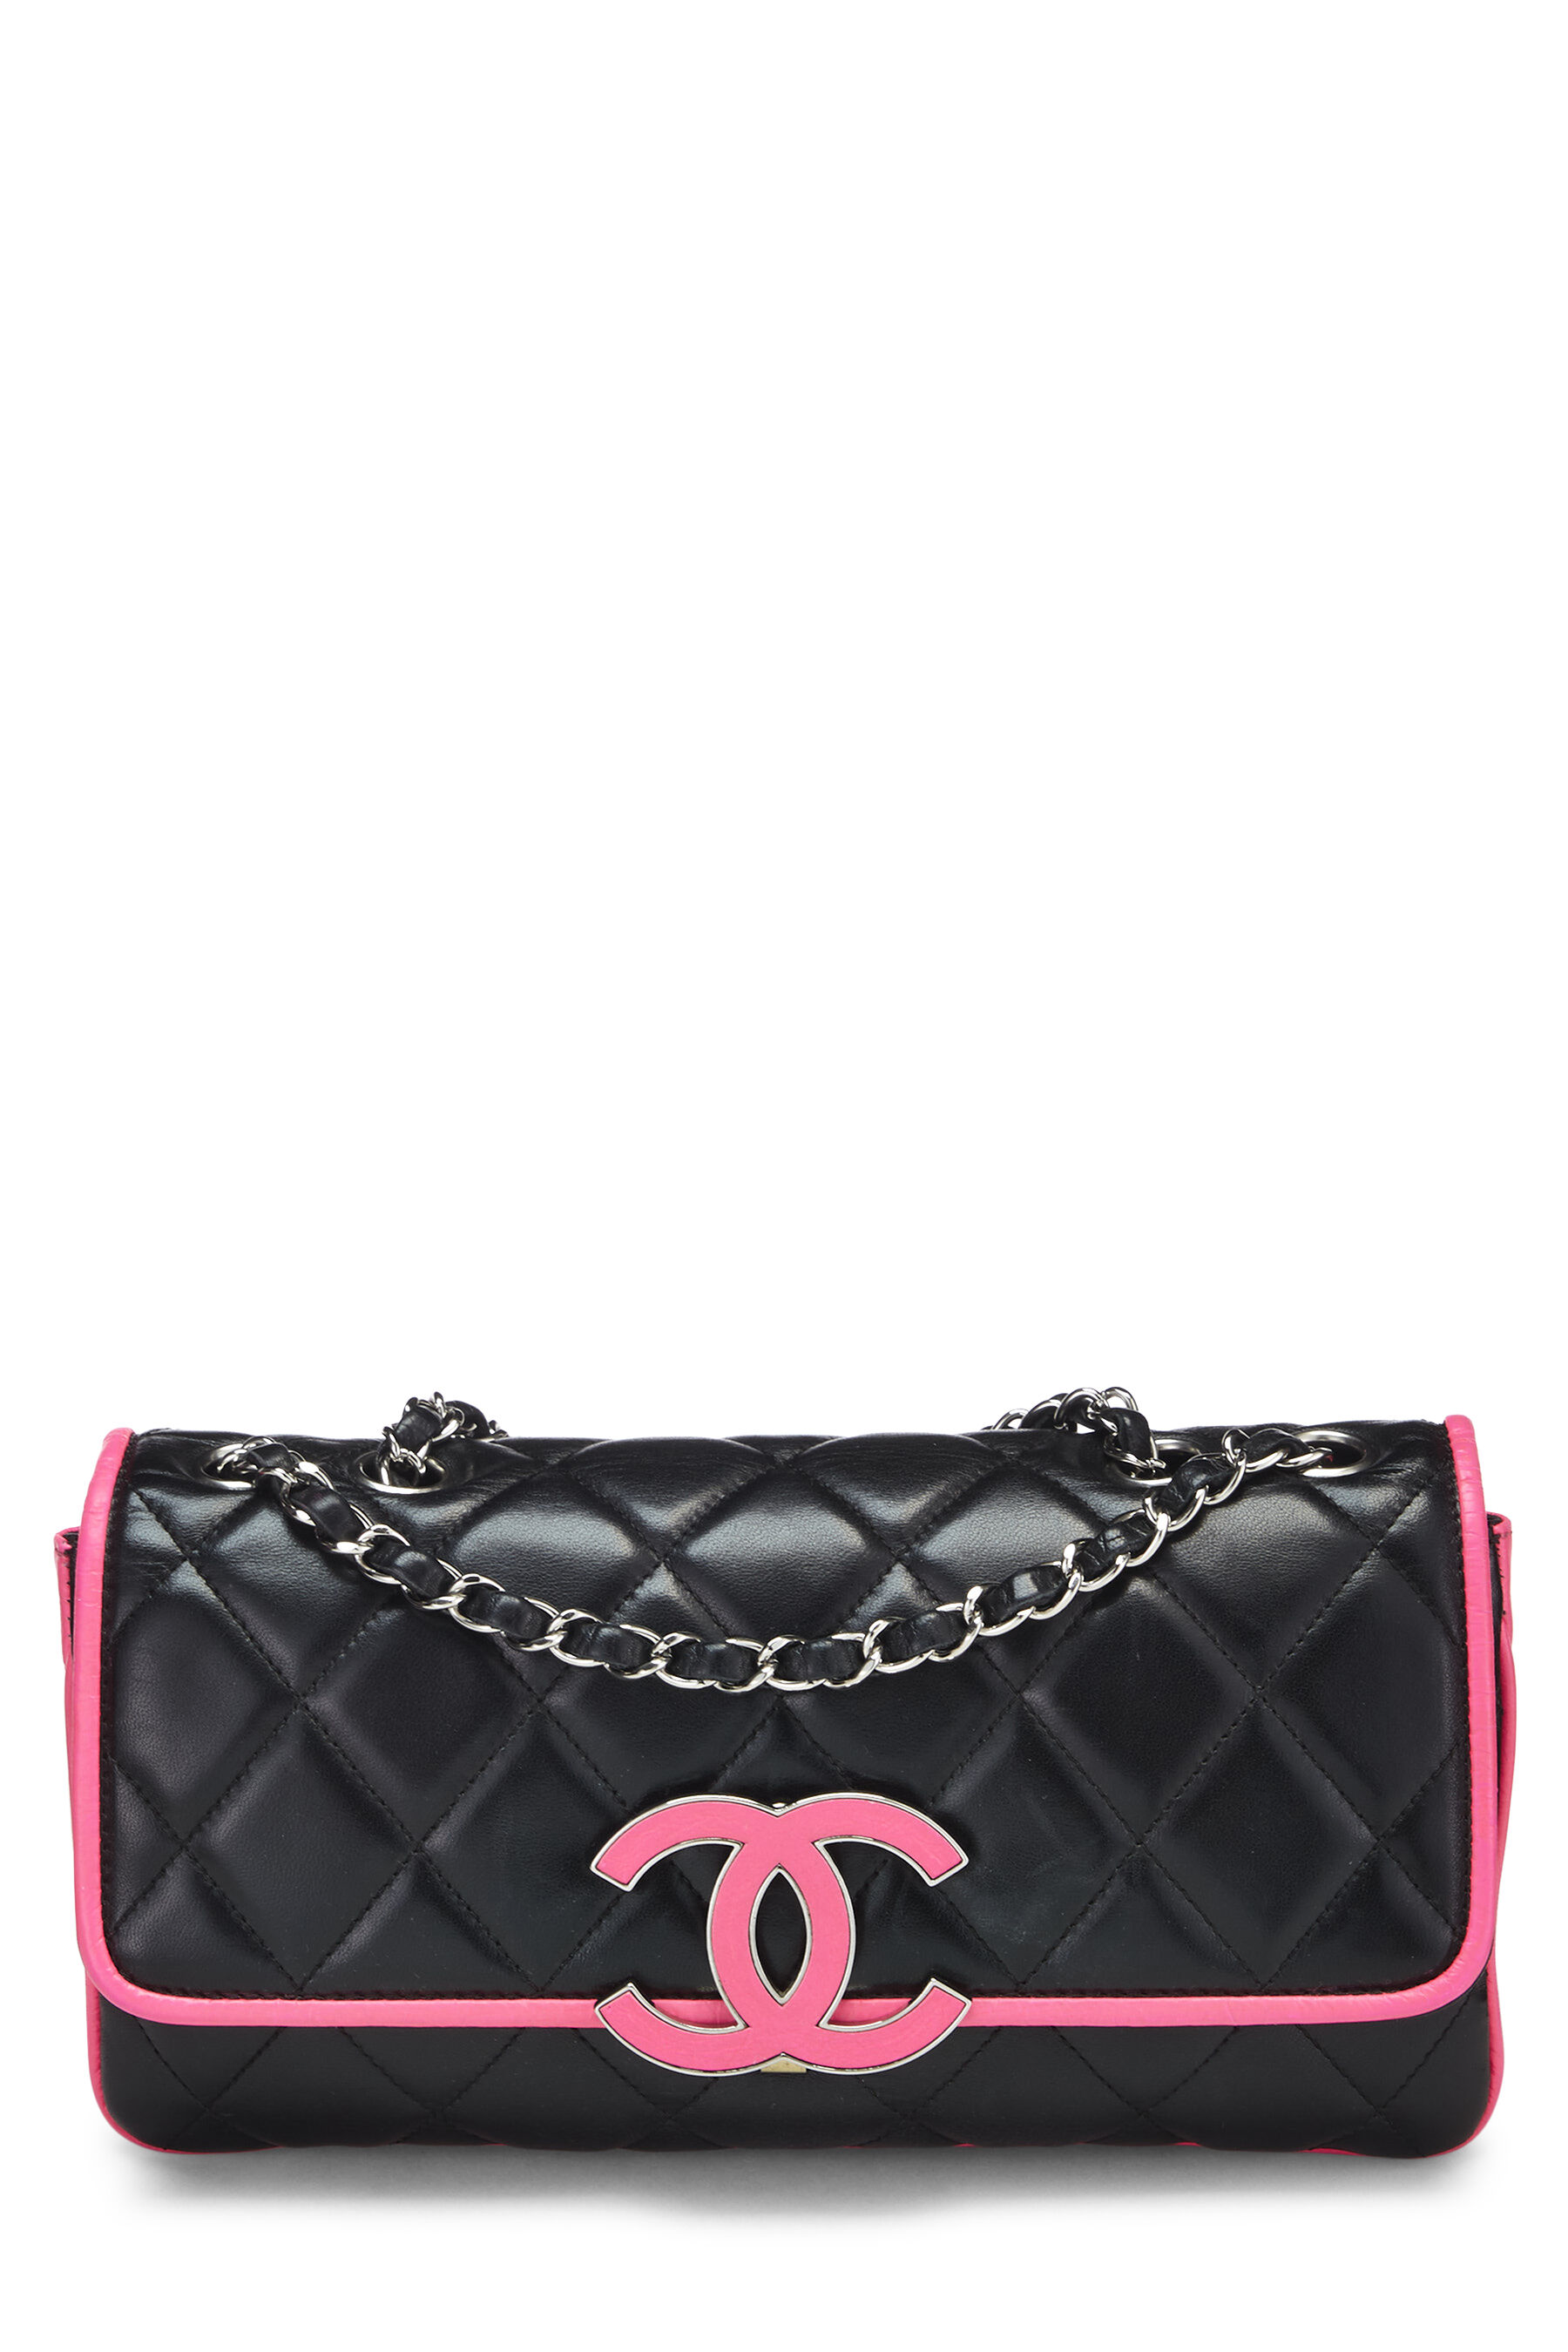 Chanel - Pink Quilted Calfskin Divine Flap Bag Medium